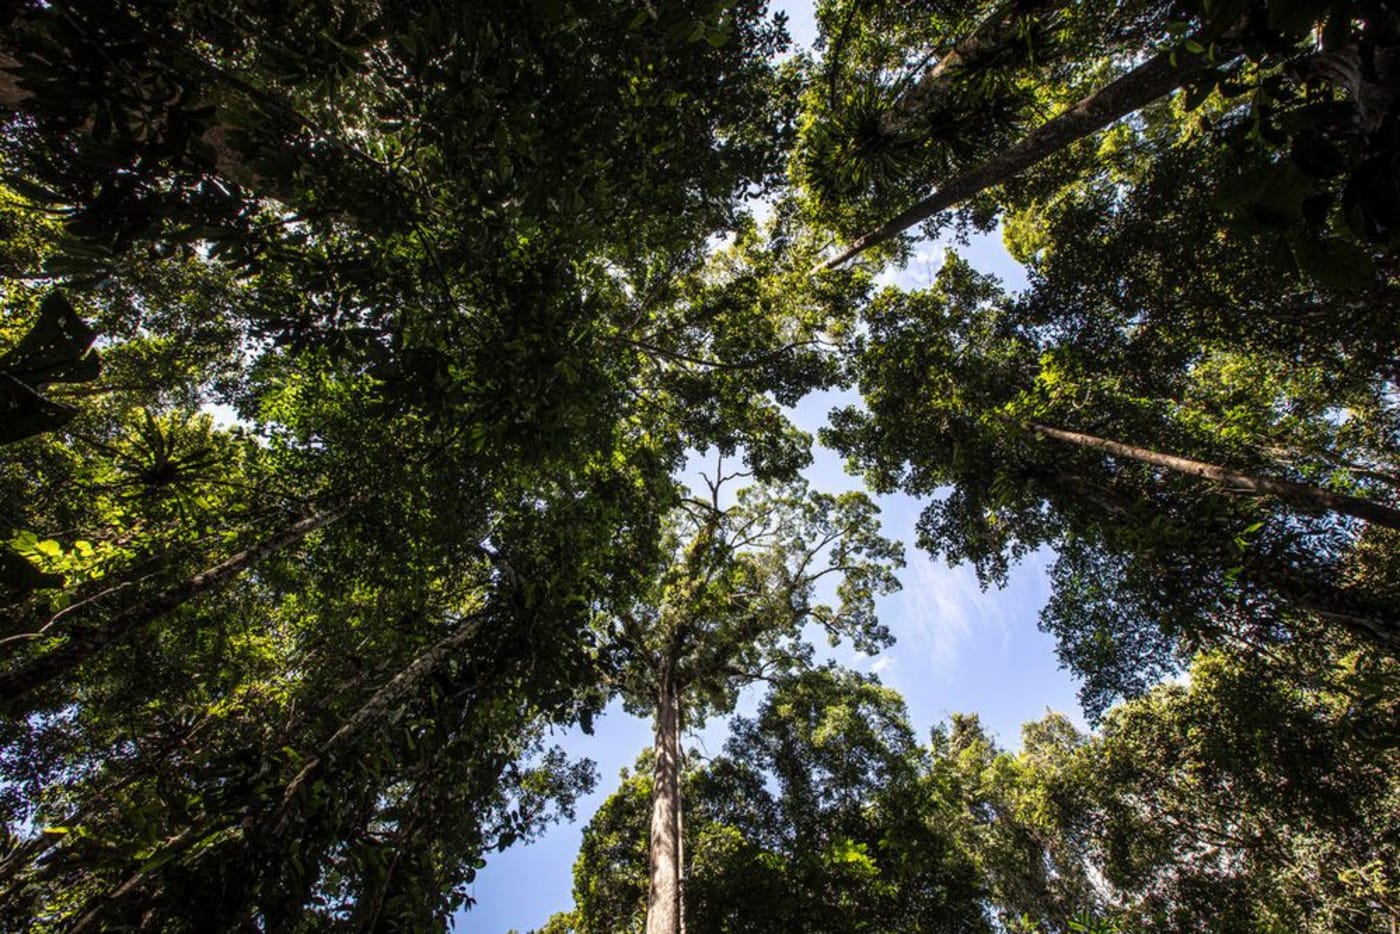 Tree canopy in Tawau Hills Park in Sabah= Borneo= Malaysia